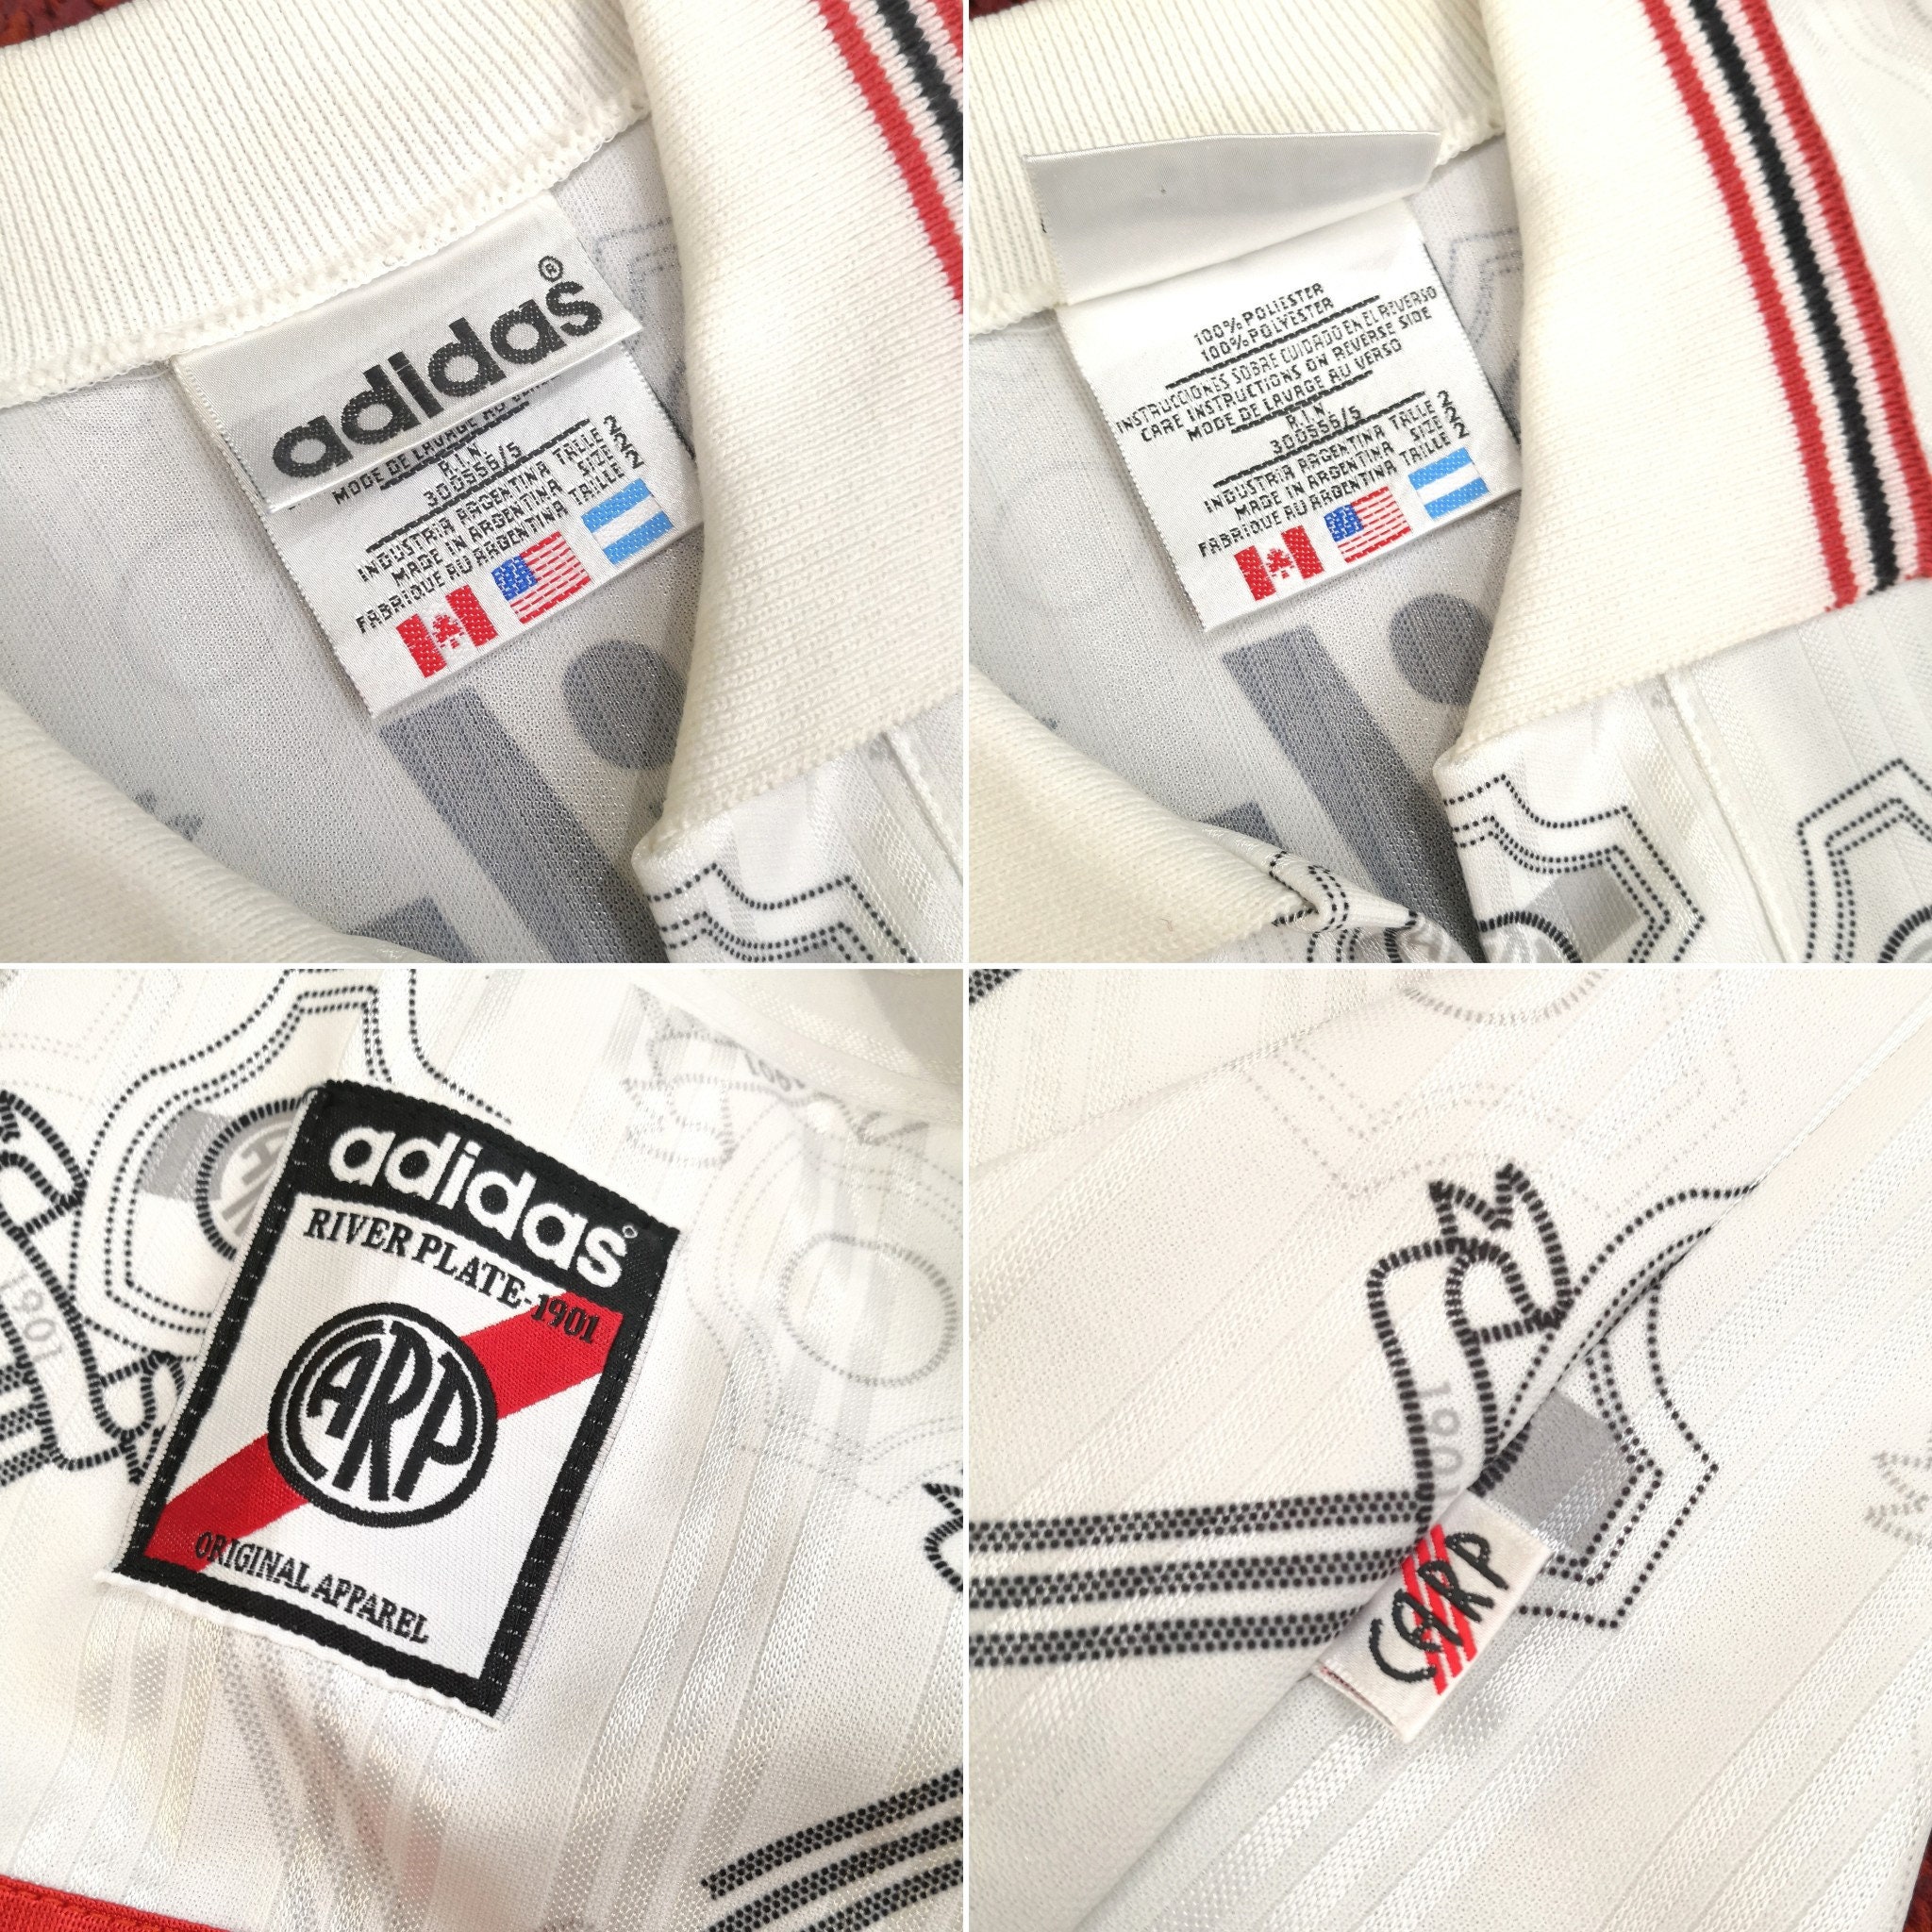 Hockey jersey River Plate Argentina Home Adidas Original. Sz XL